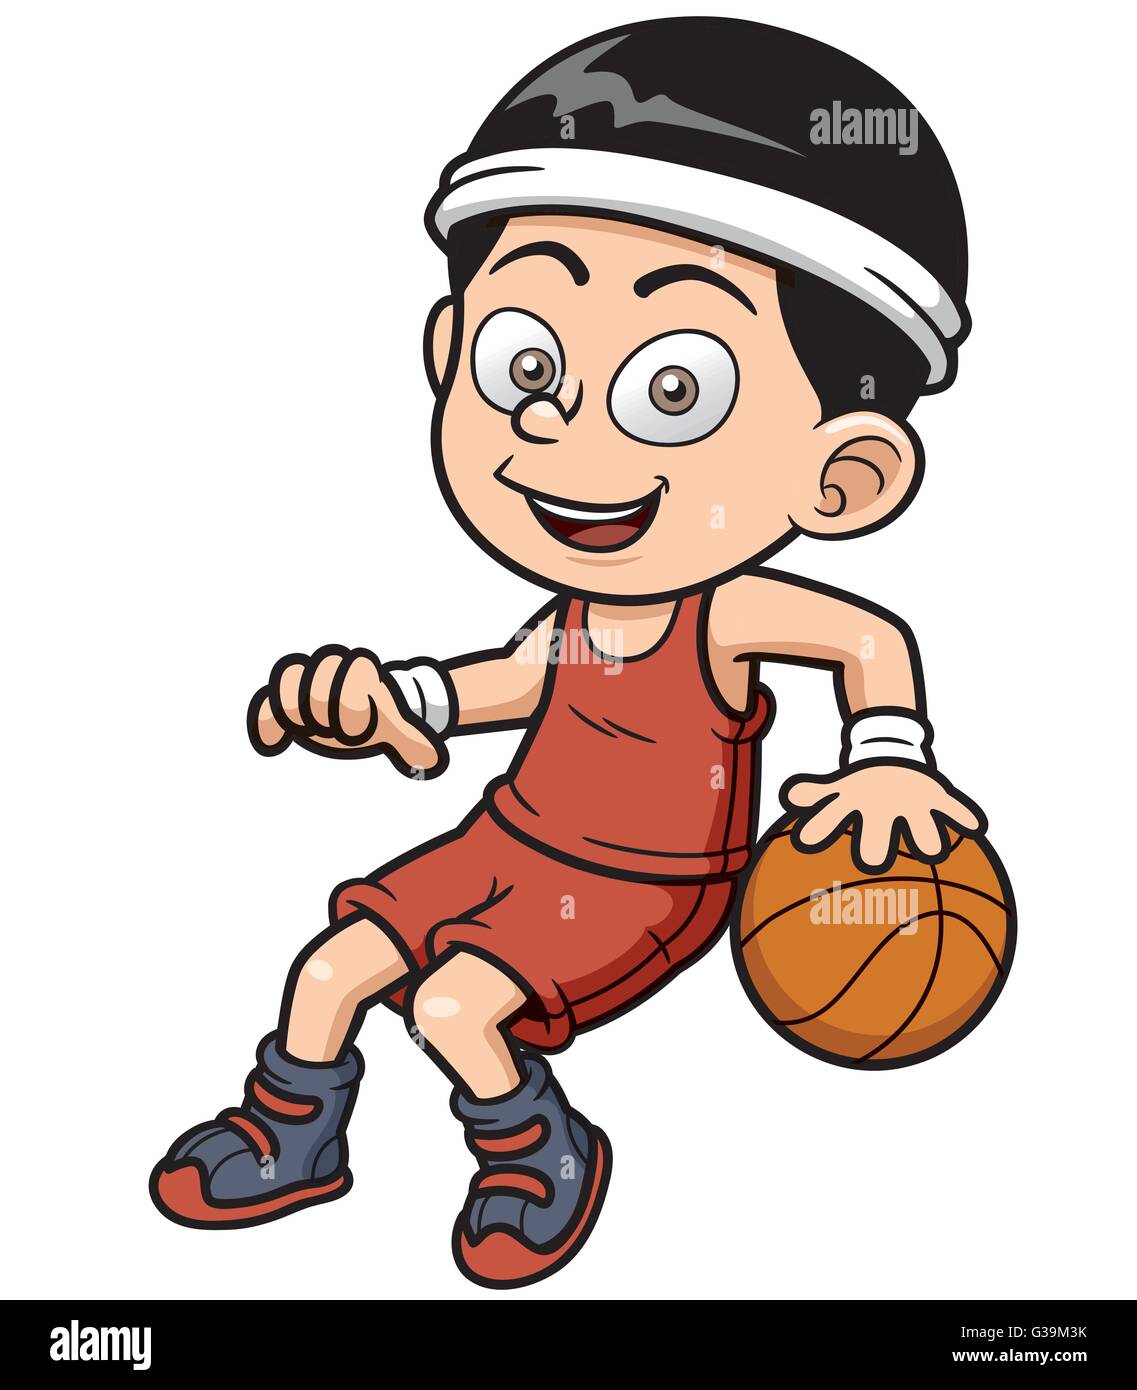 Vector illustration of Cartoon Basketball player Stock Vector